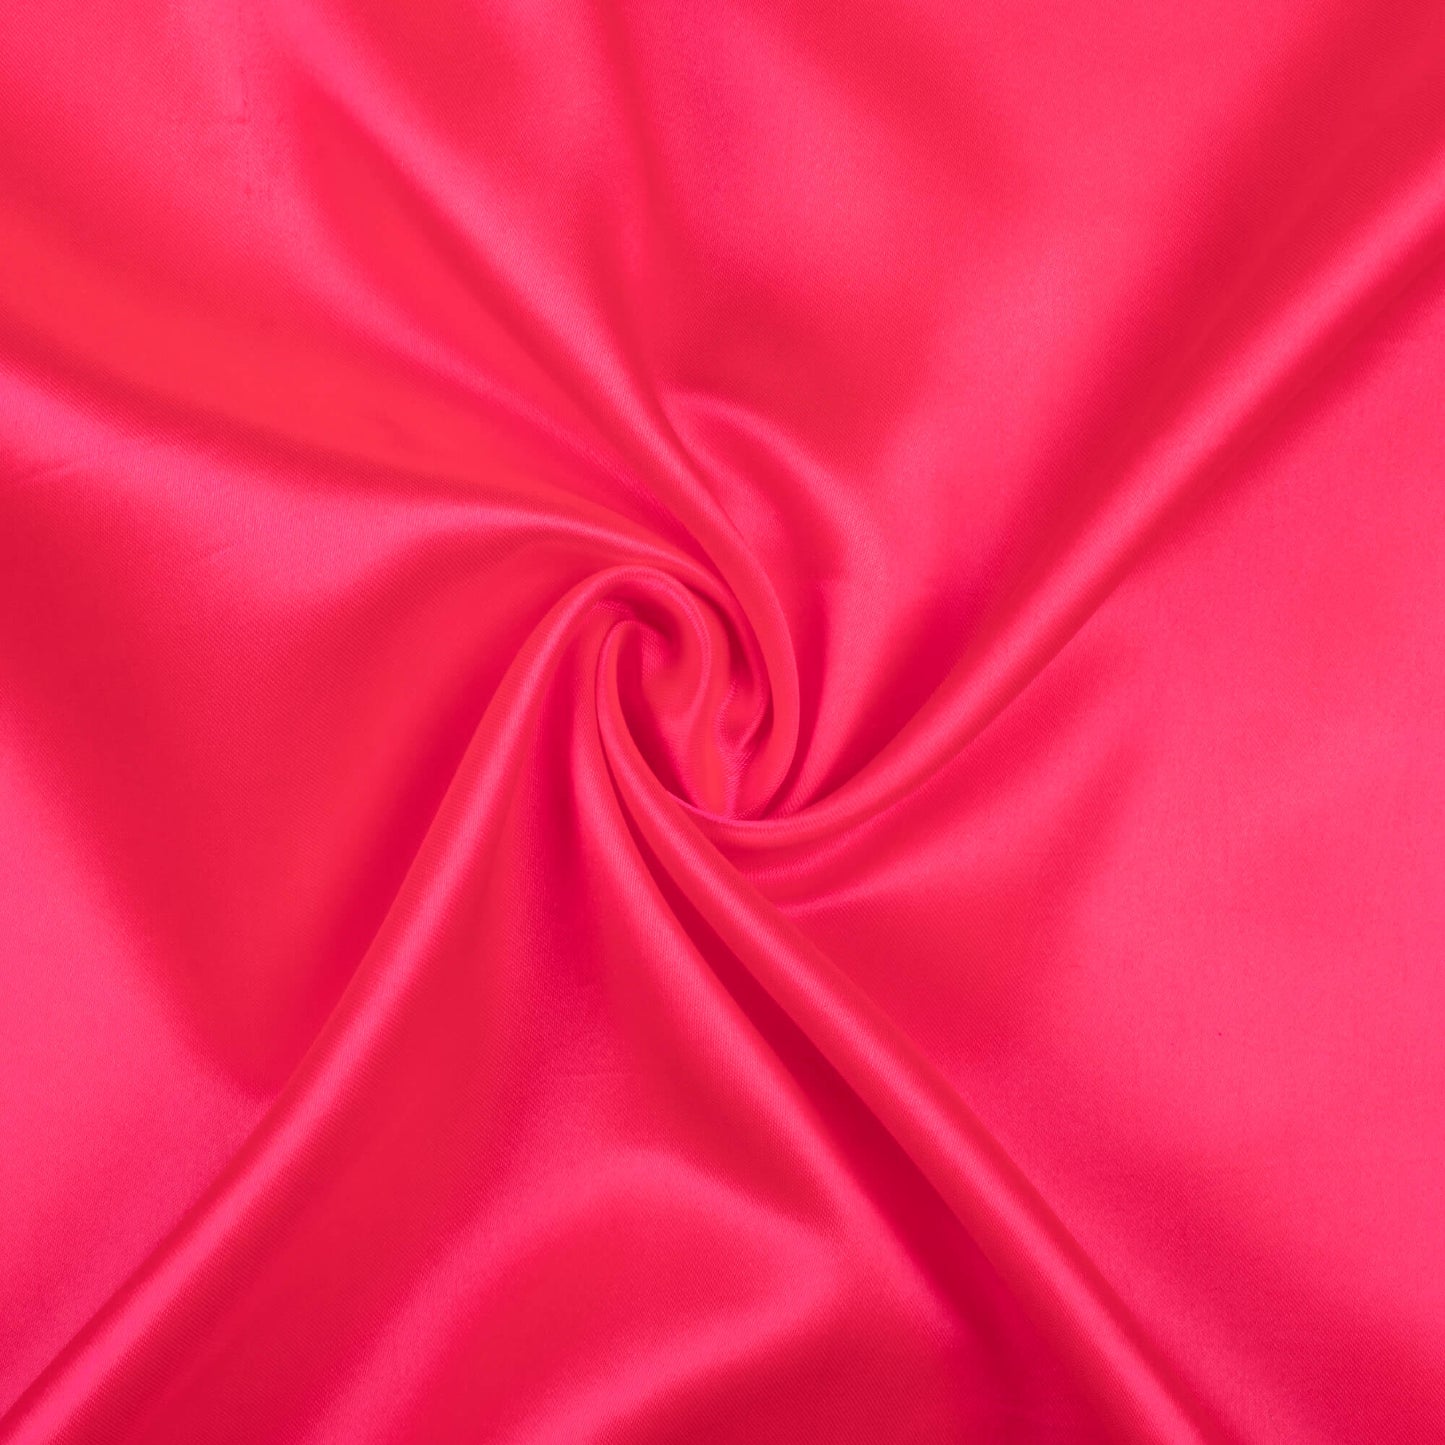 Flourescent Pink Plain Neon Ultra Satin Fabric